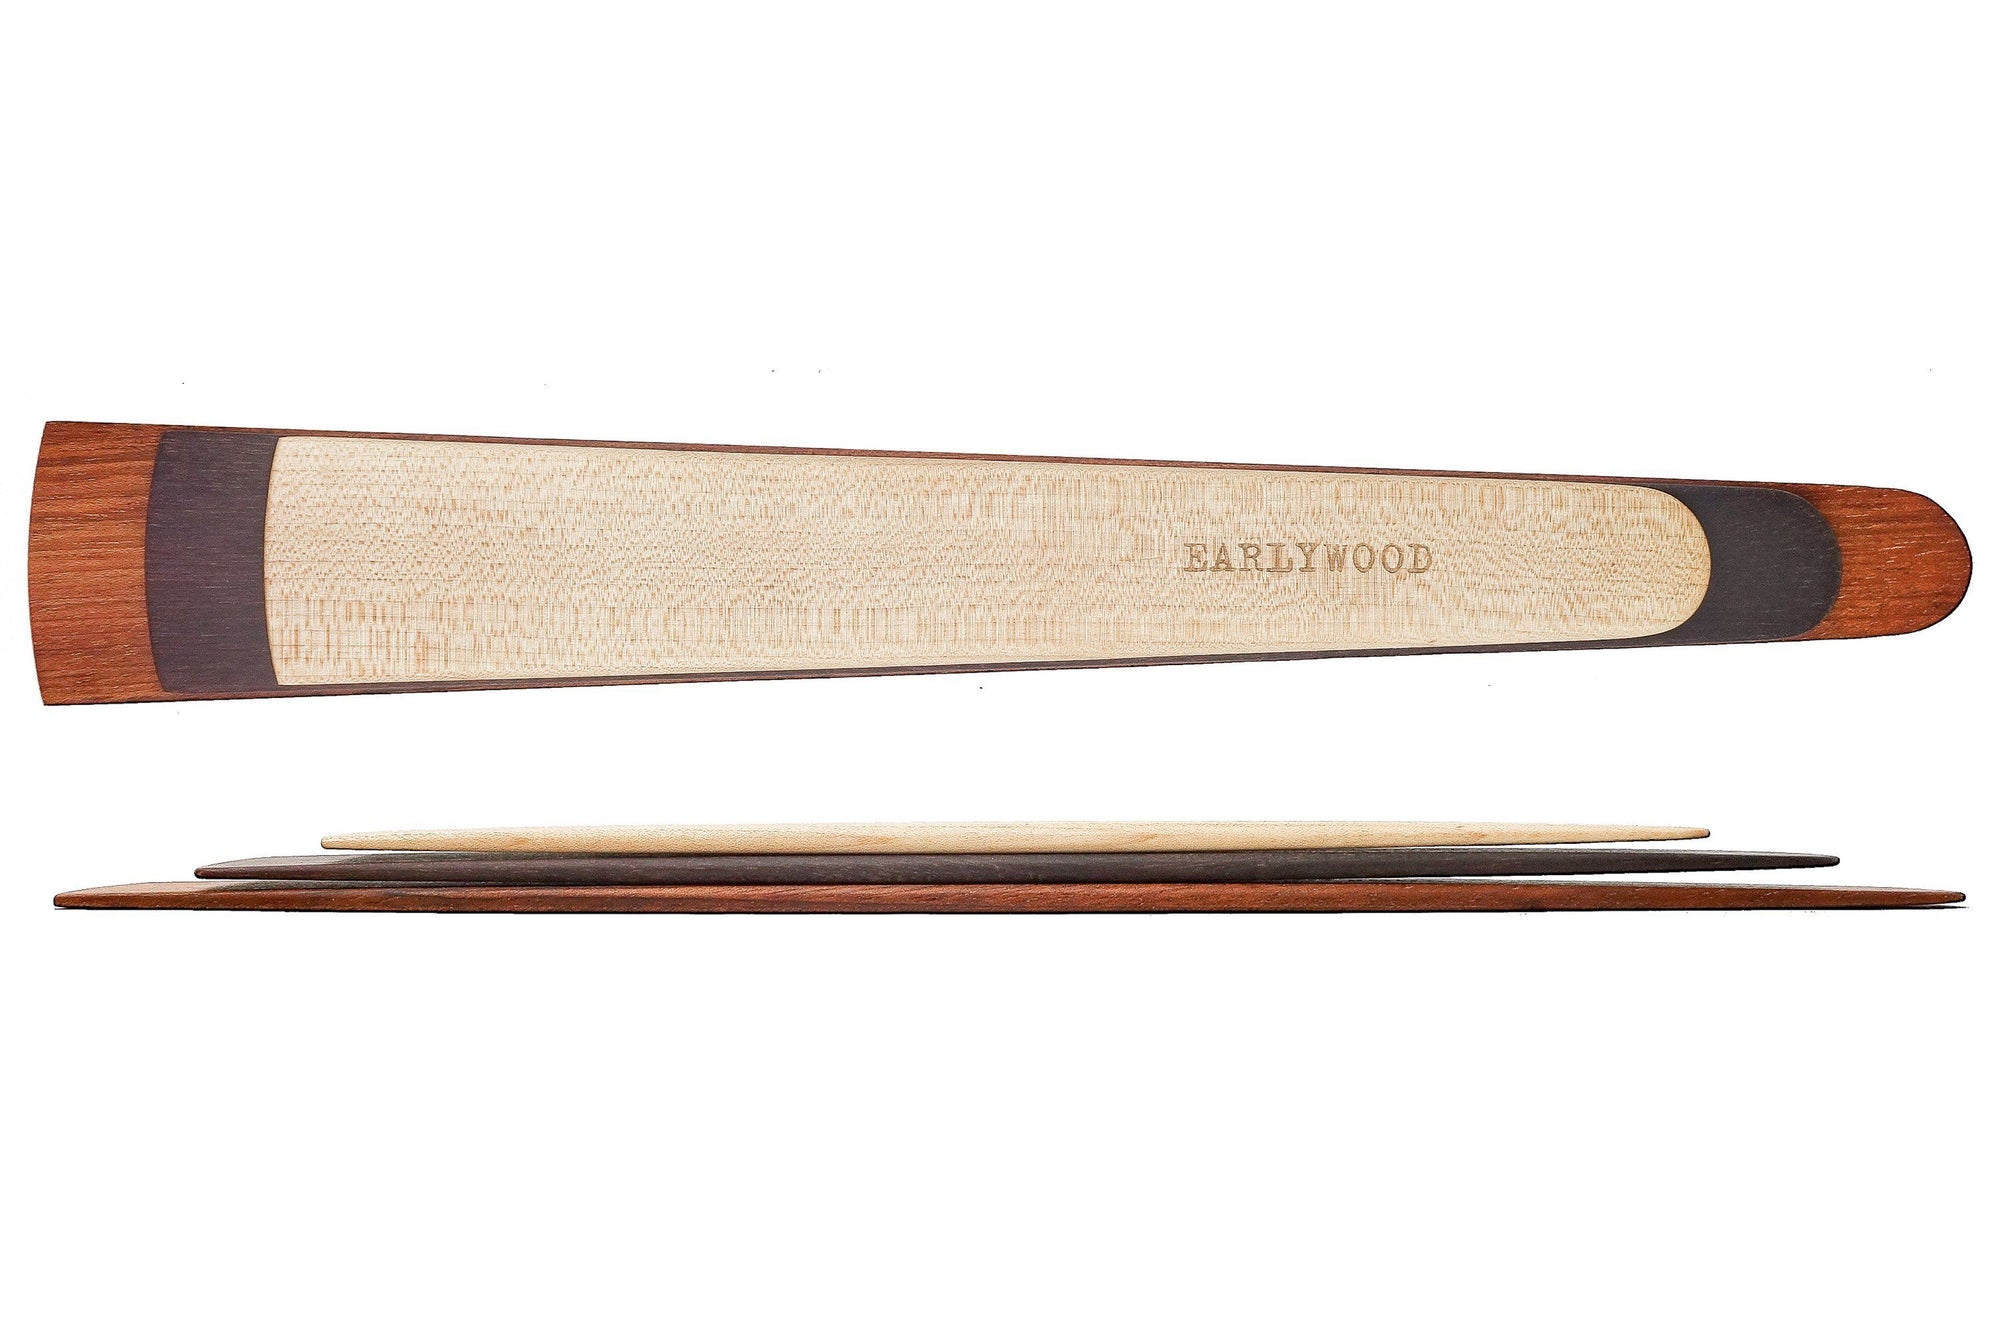 wooden spatula set - Earlywood